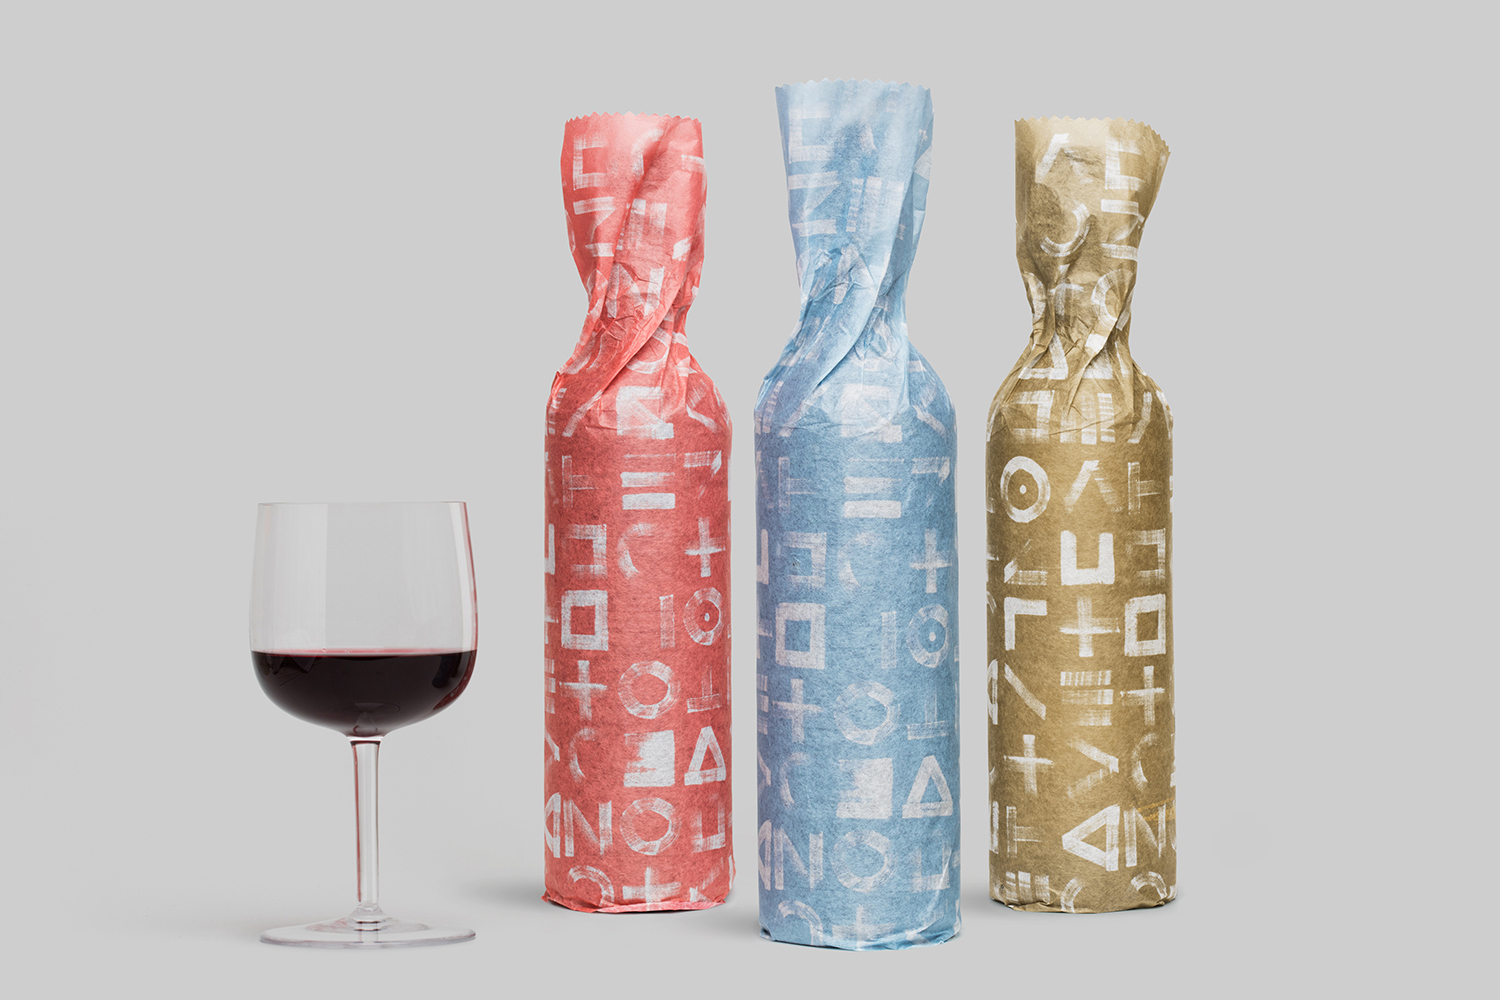 Subscripting Wine Branding & Packaging – Sommos by Mucho